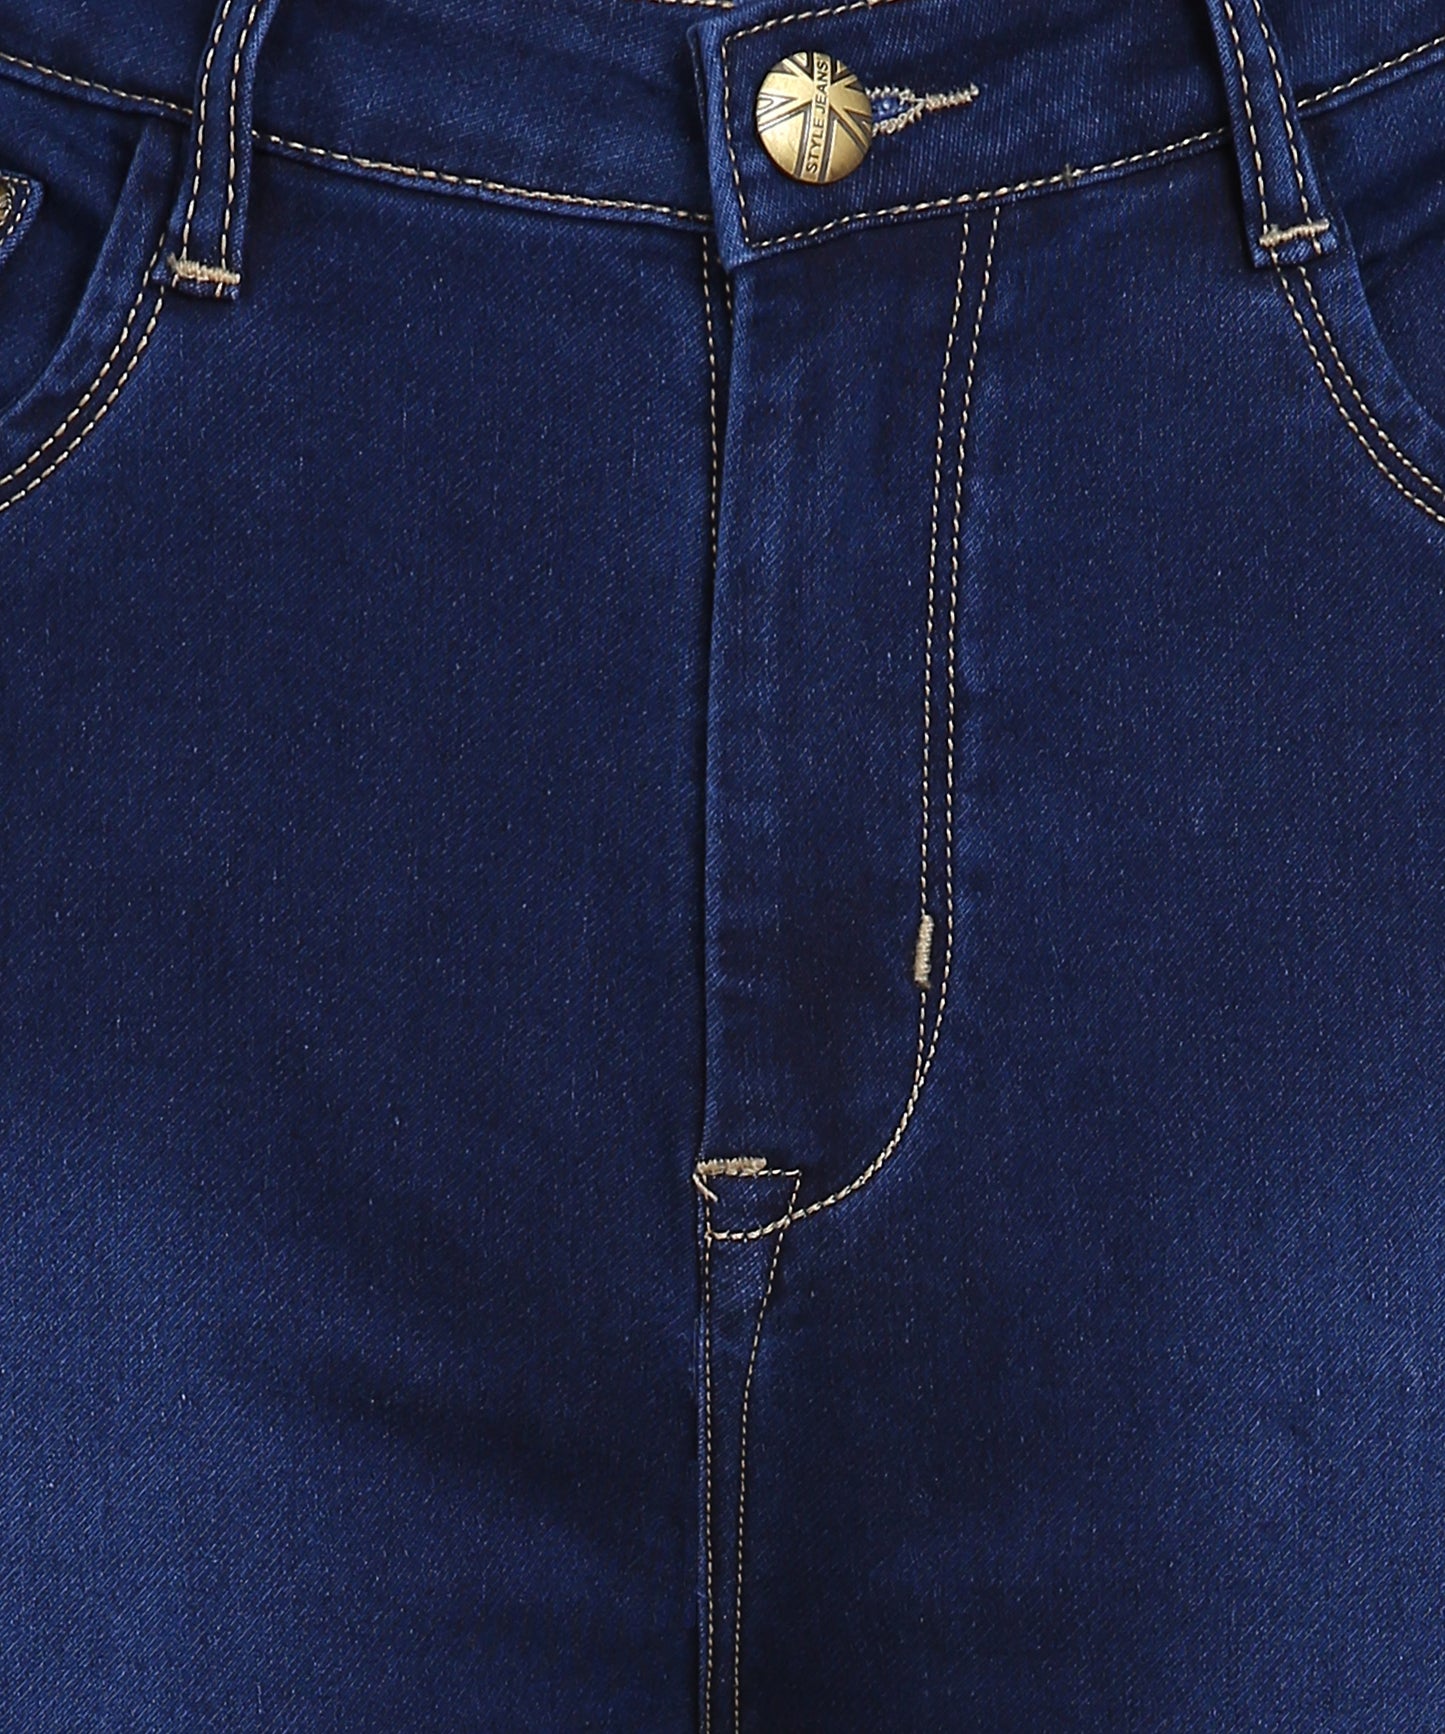 Dark Denim Cotton Lycra High Waist Regular Jeans for Women-1598